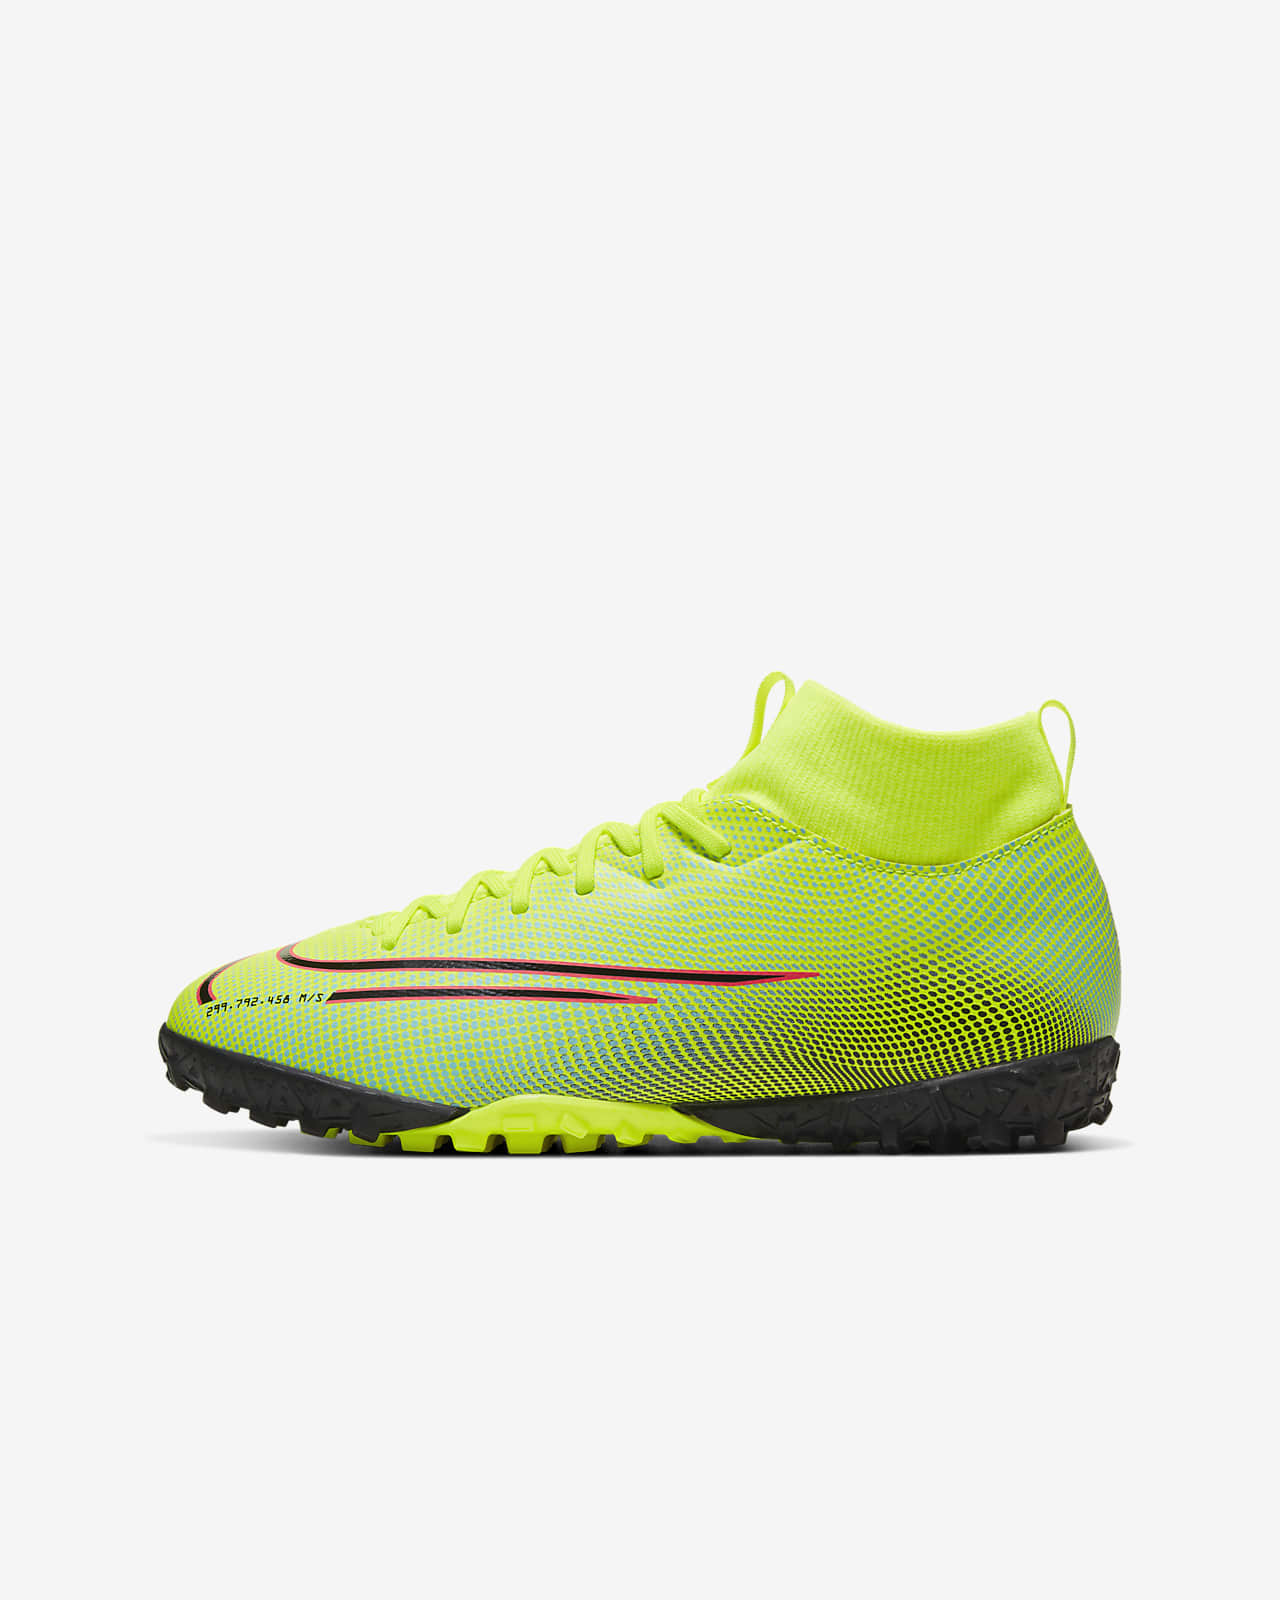 nike soccer running shoes